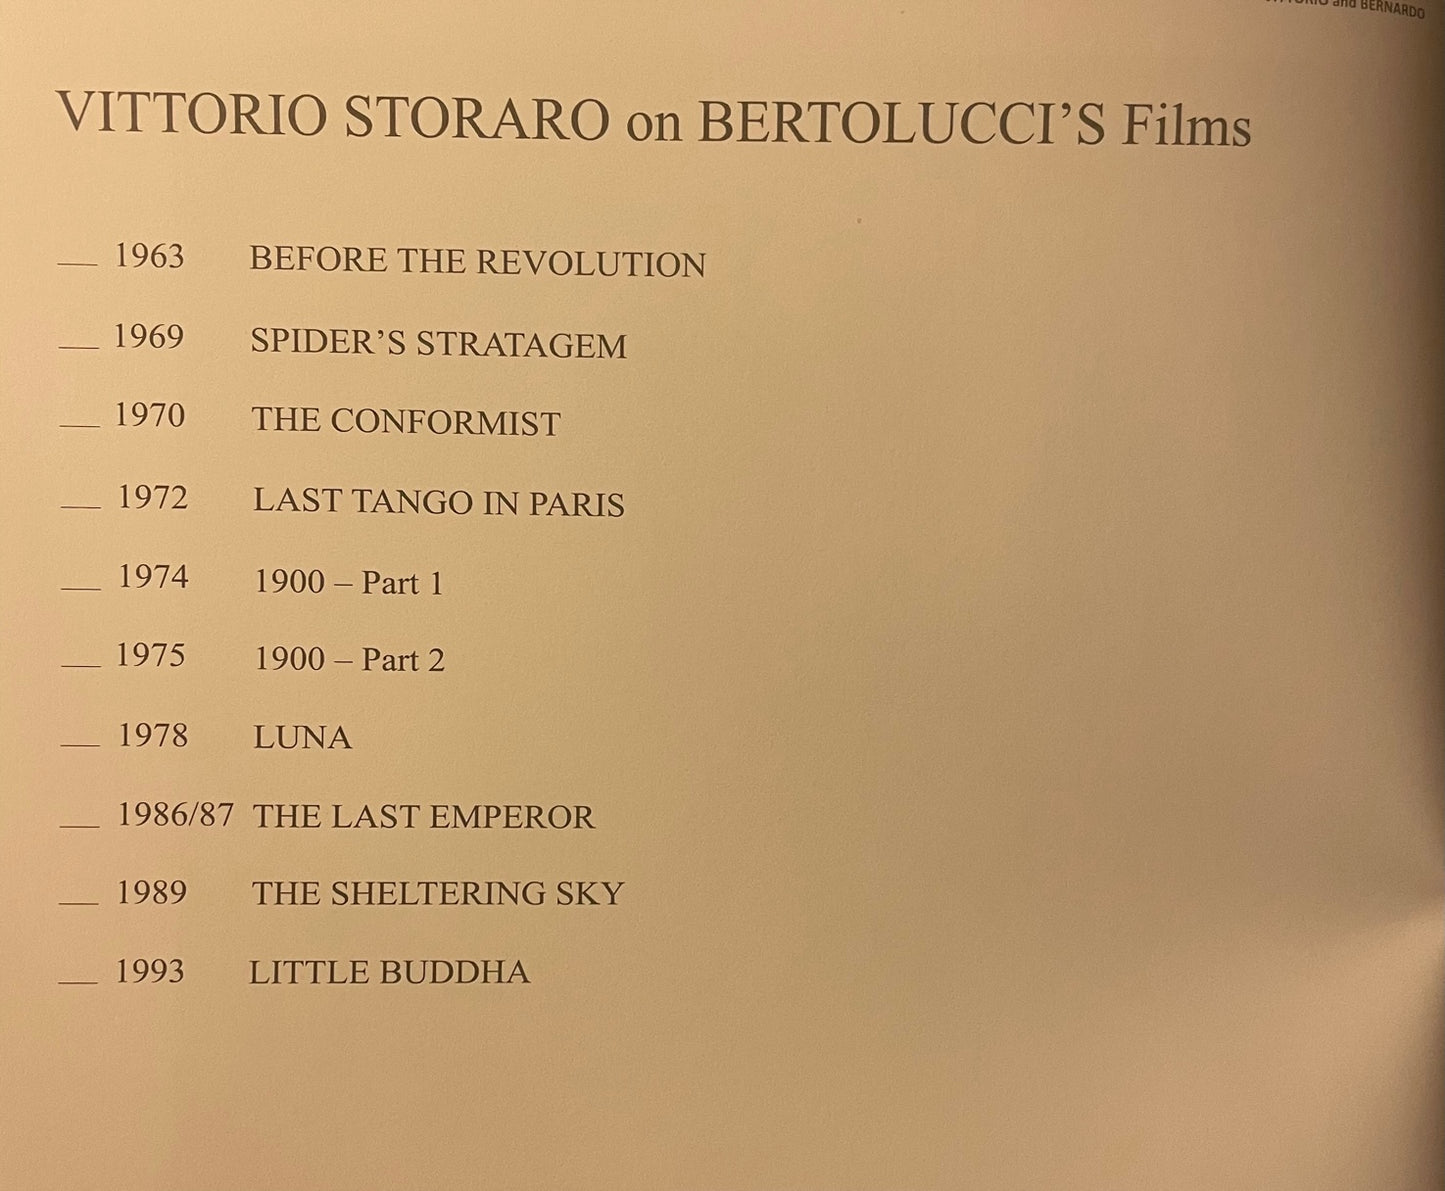 Storaro on Bertolucci's Films